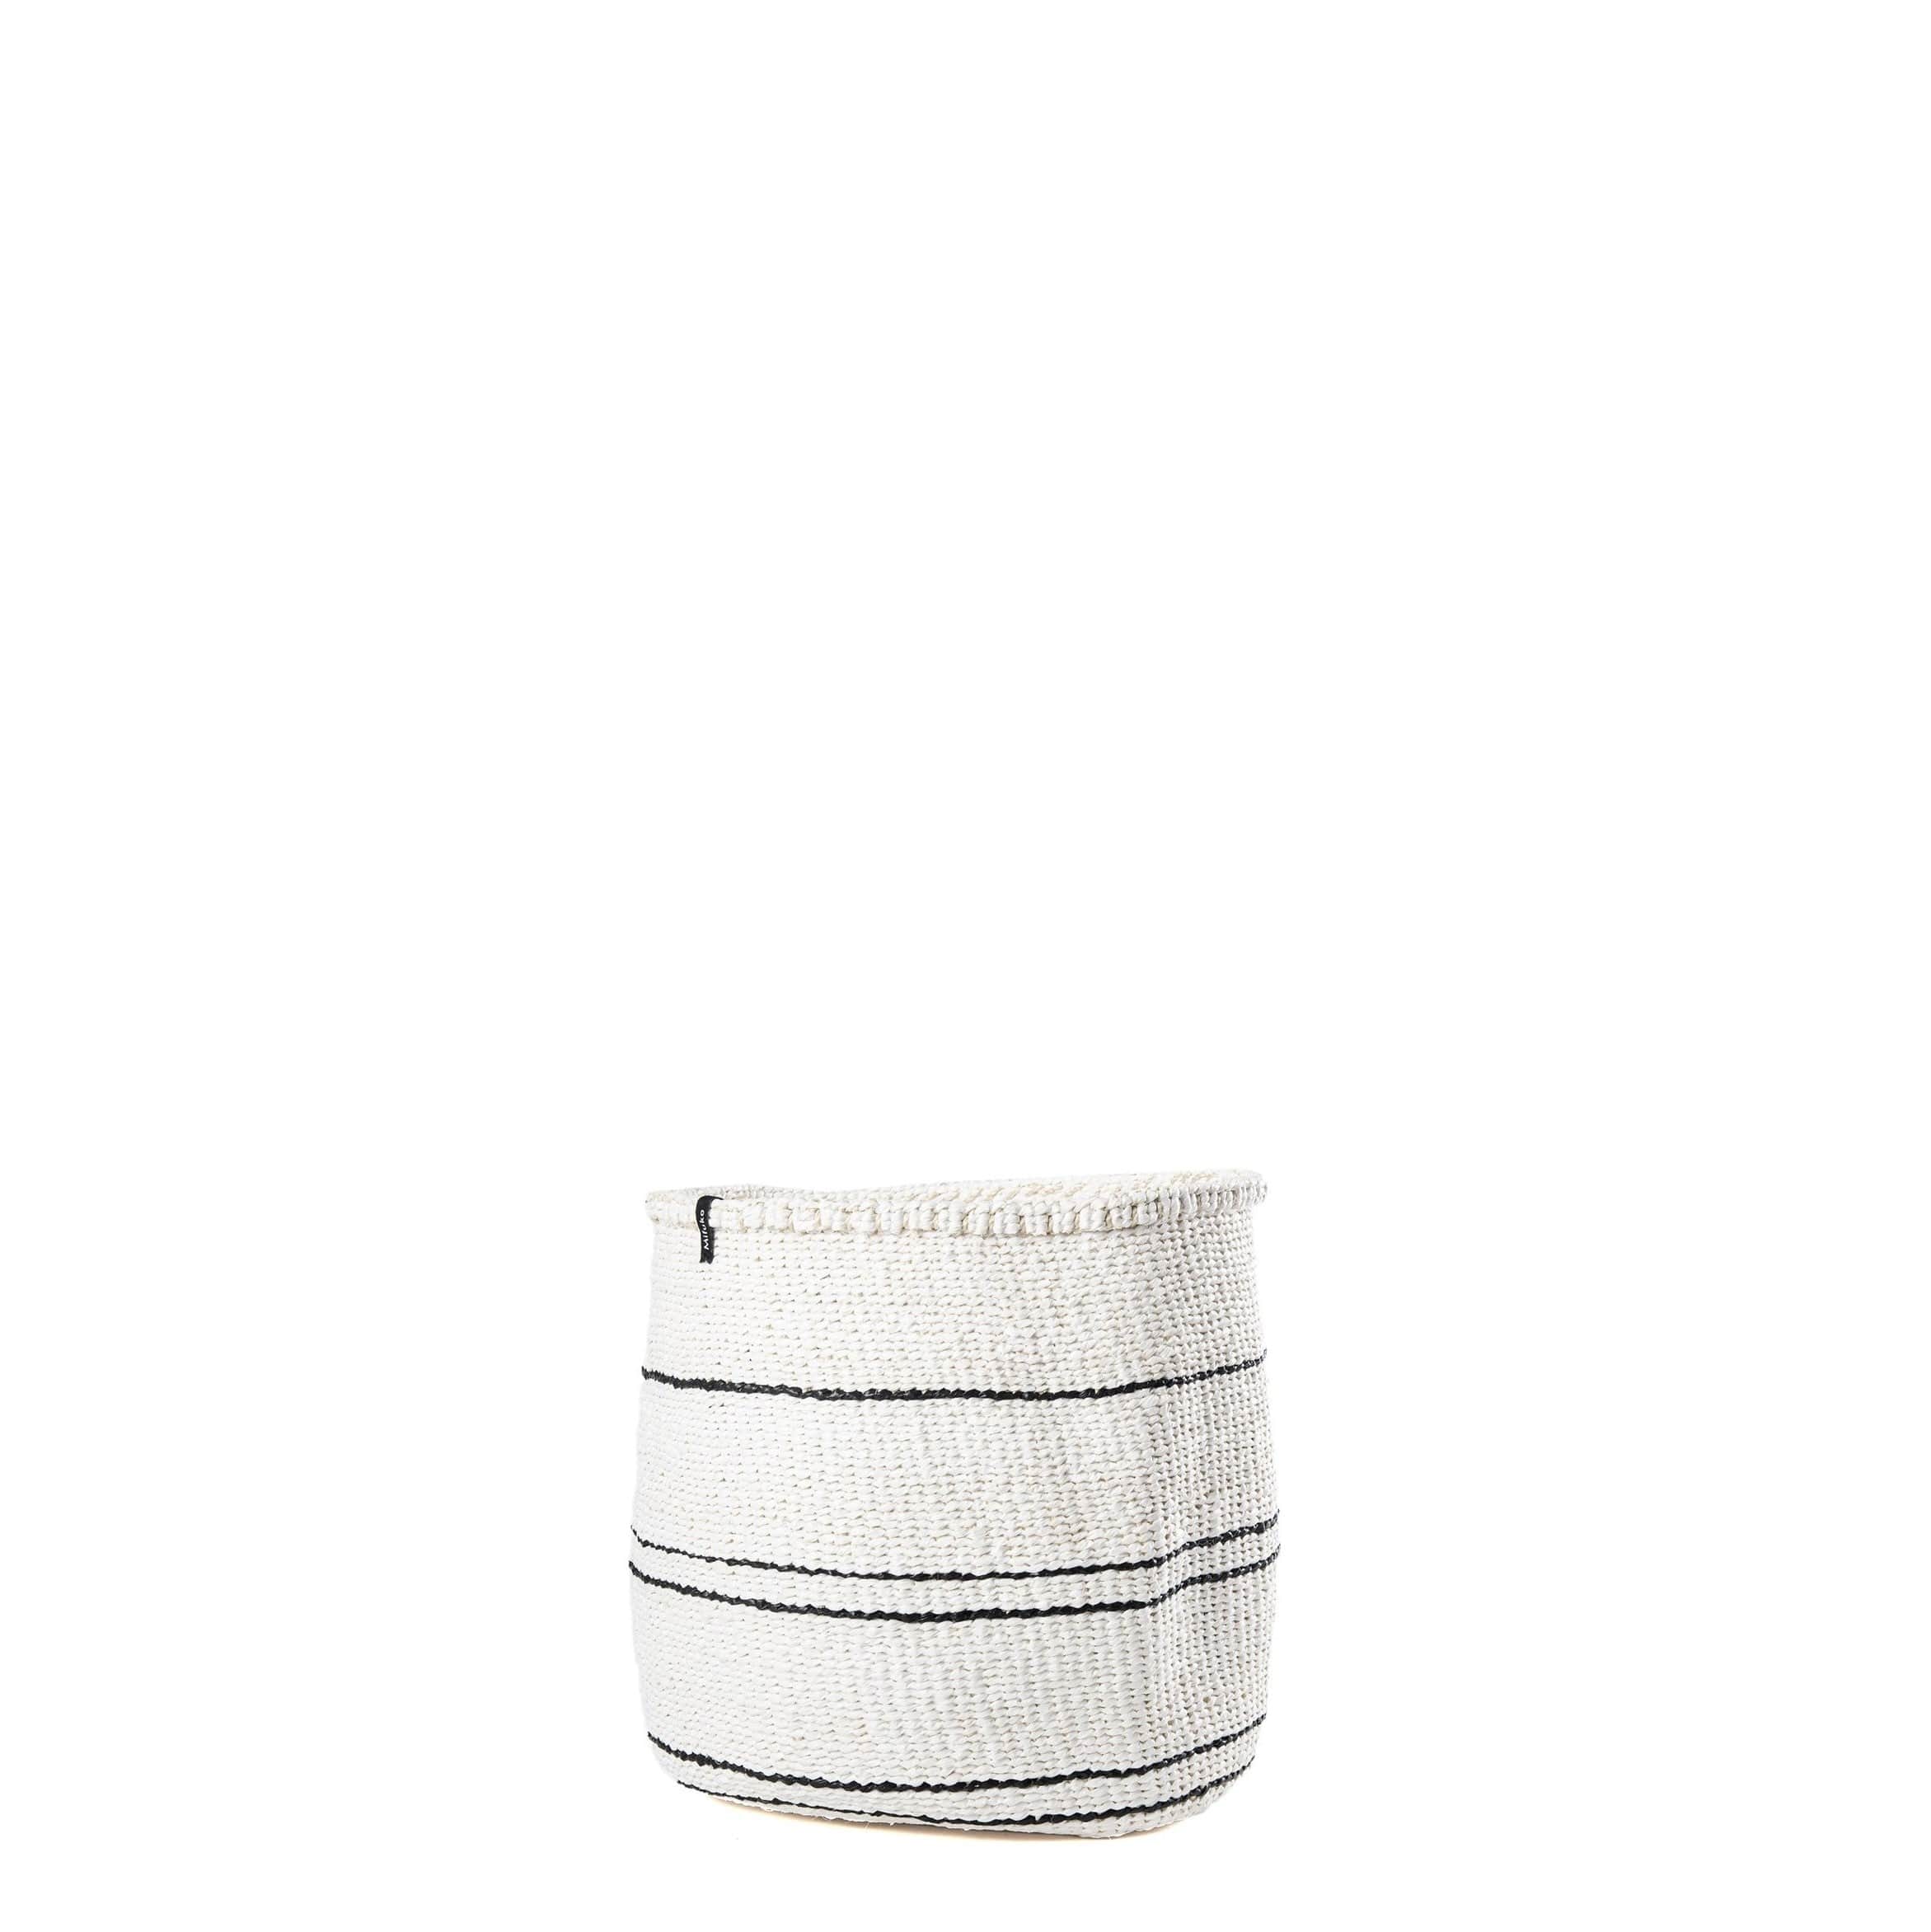 Mifuko Partly recycled plastic and sisal Small basket S Kiondo basket | 5 black stripes S